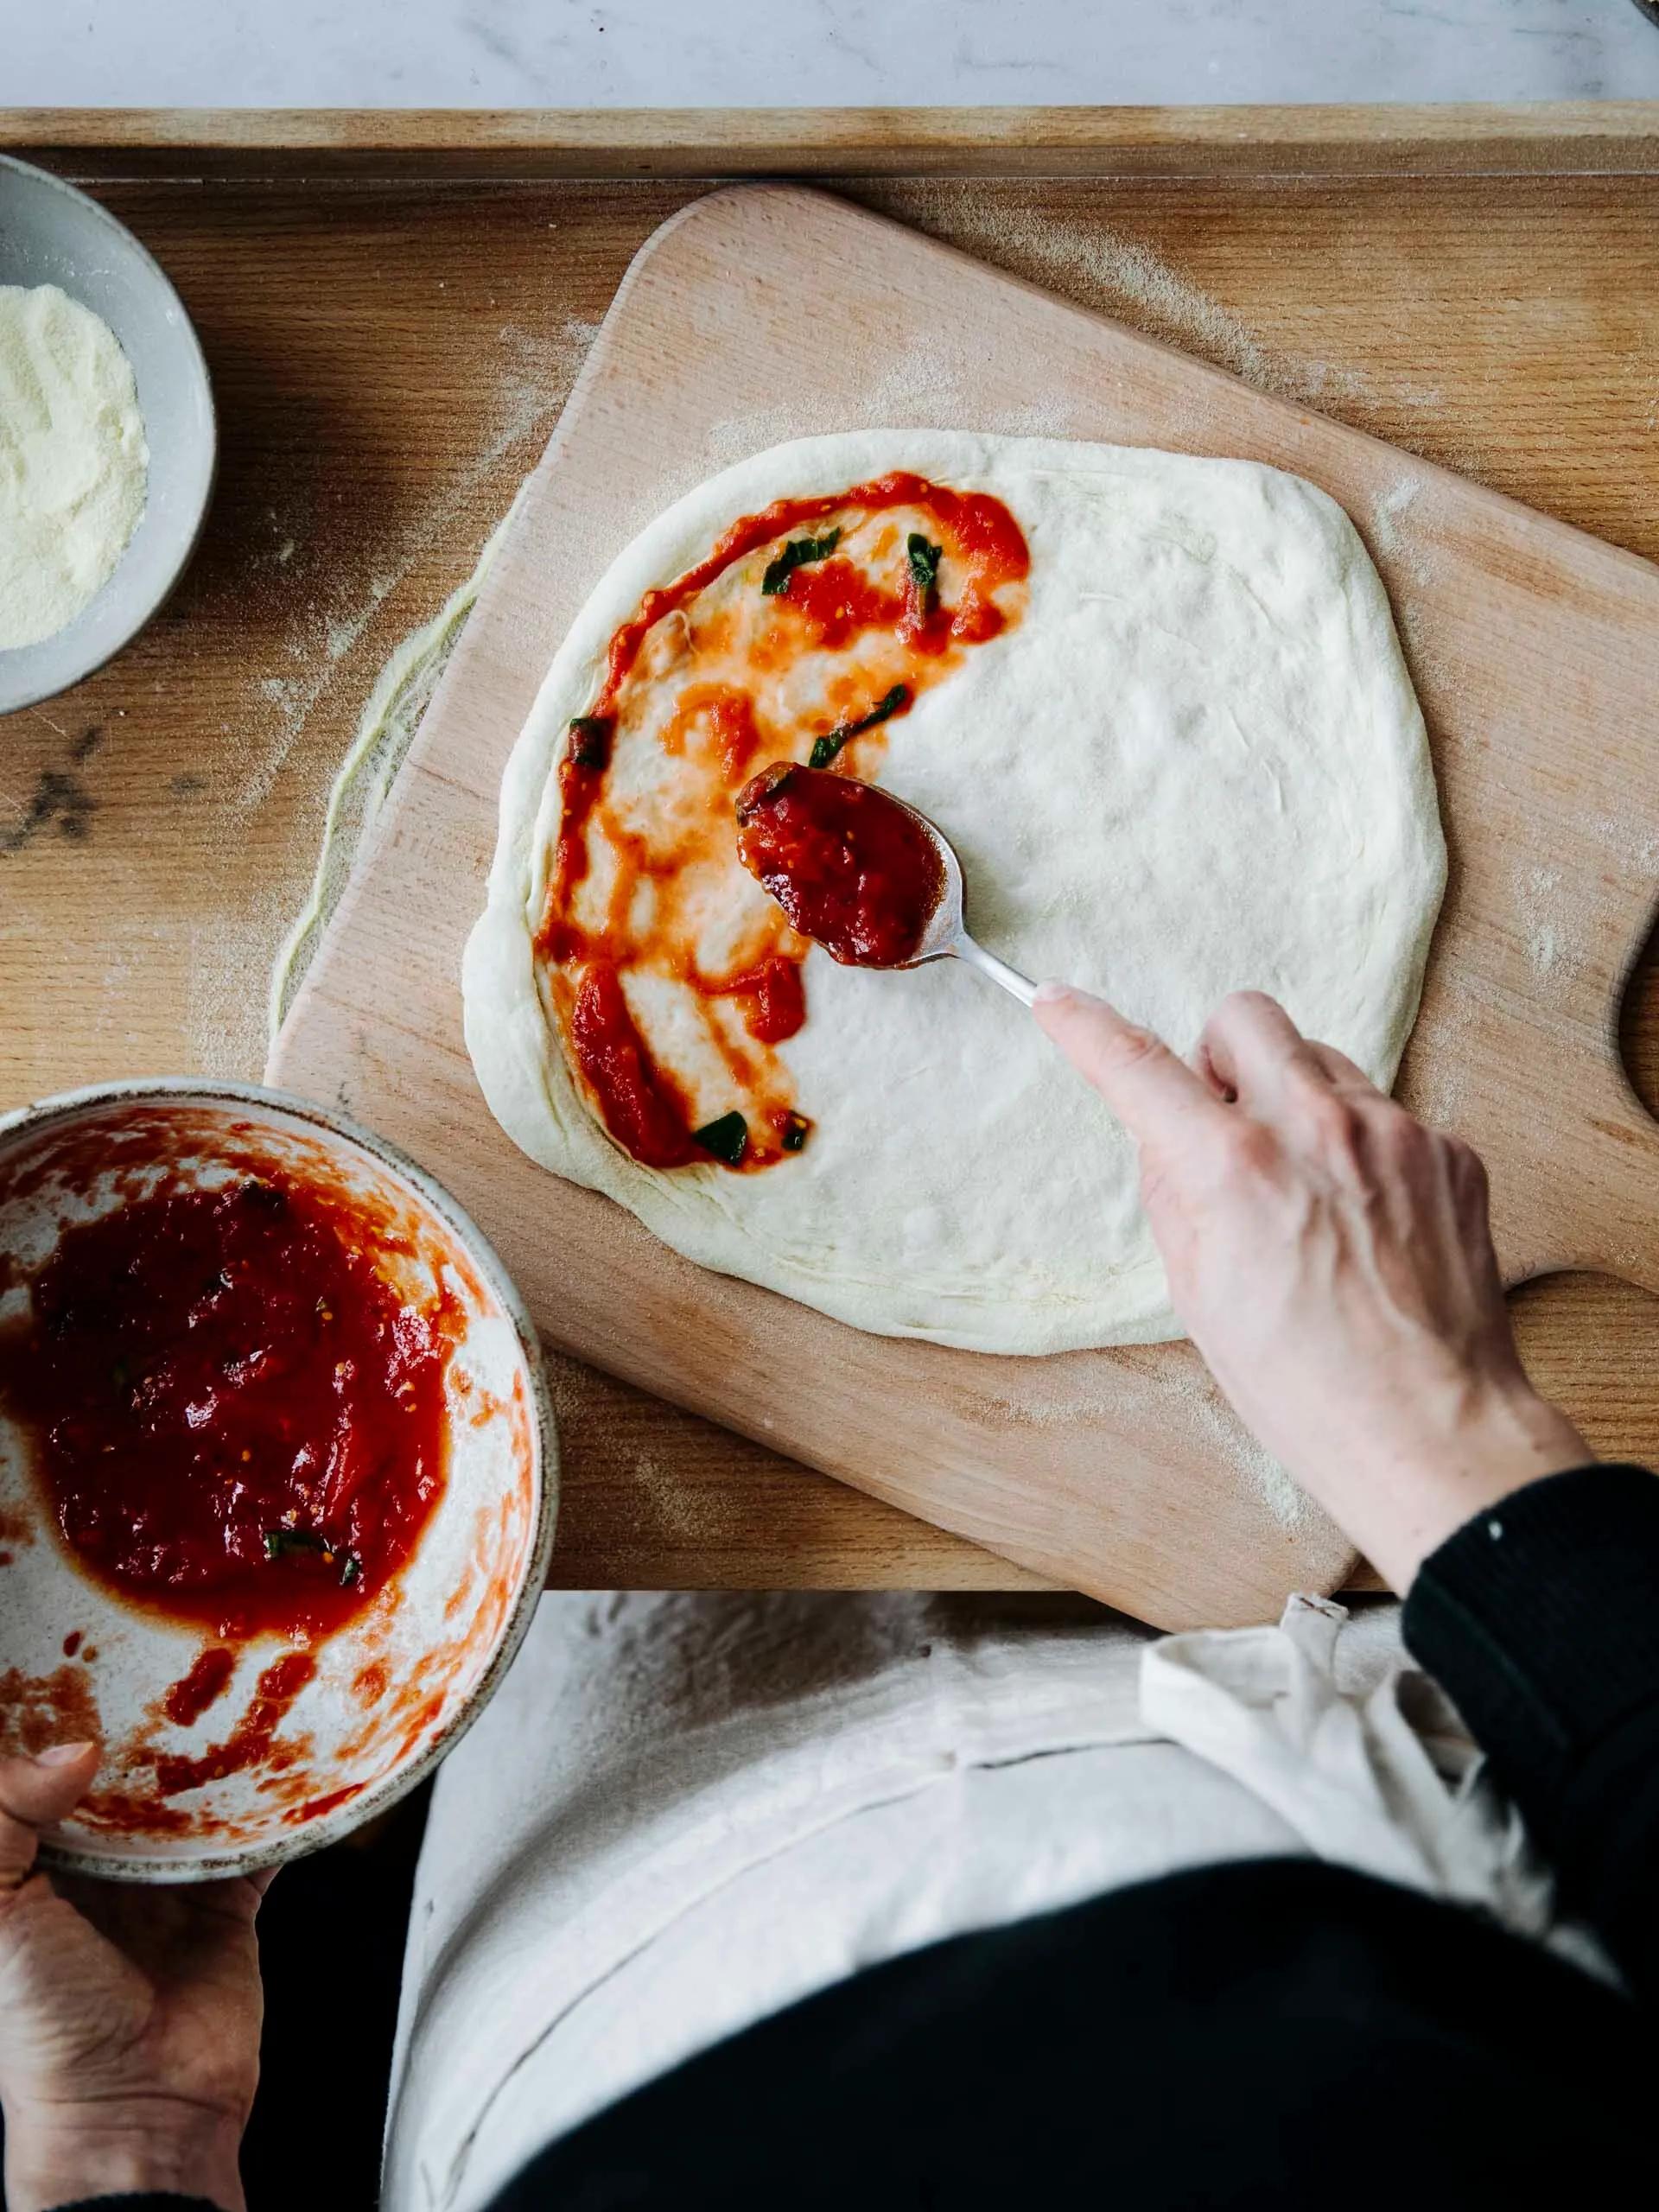 Pizzateig selber machen - das perfekte Grundrezept — Backstübchen